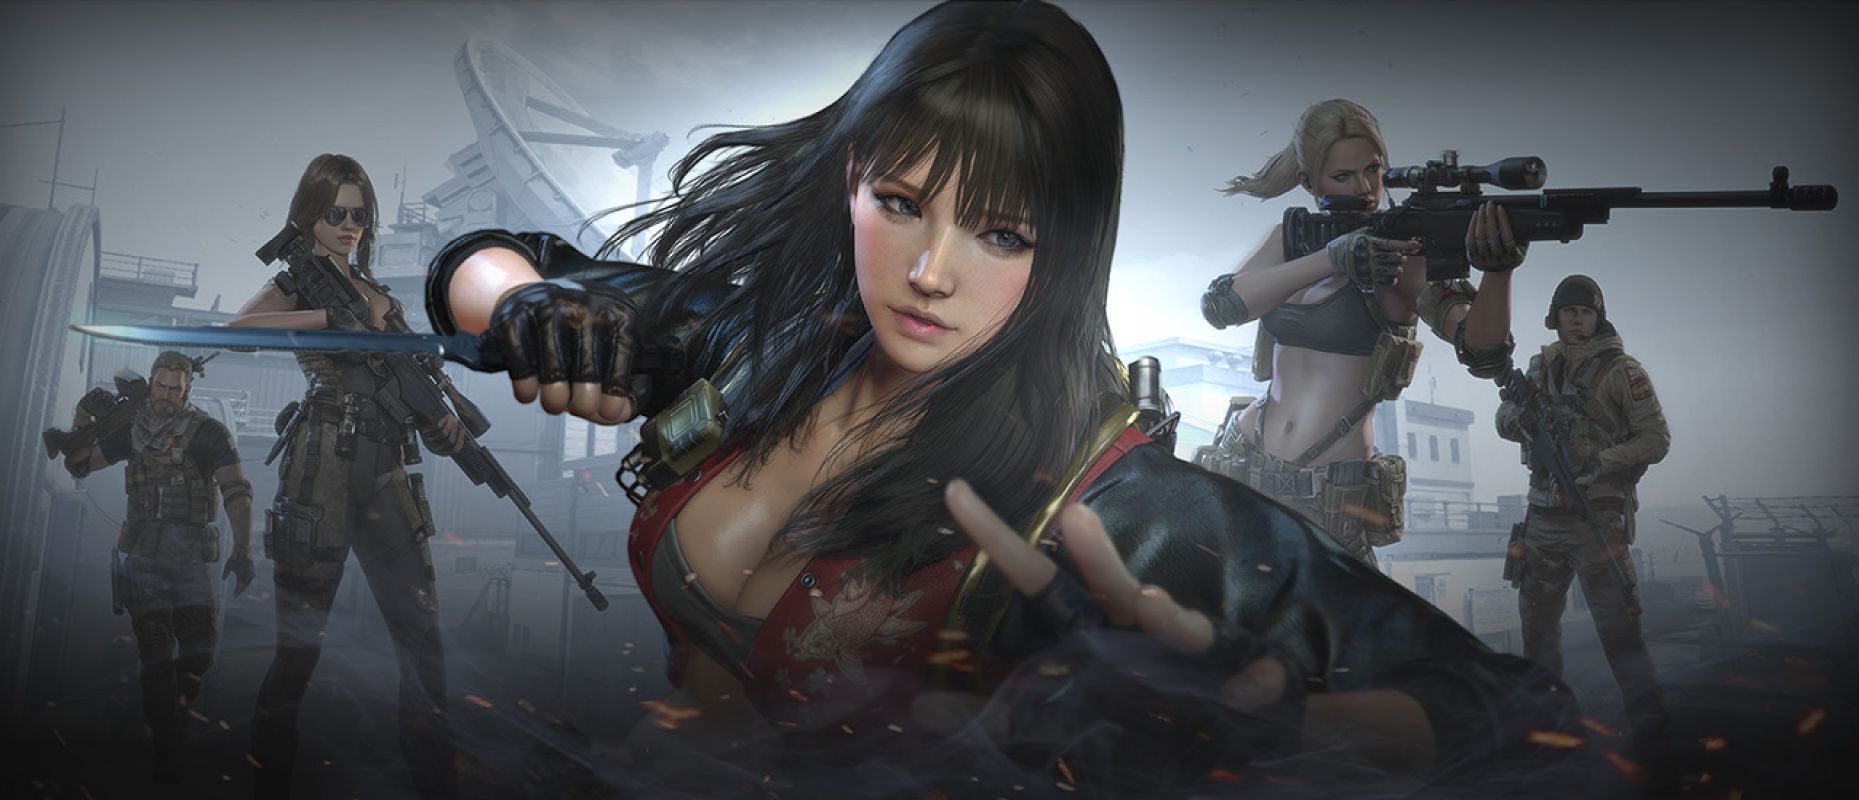 Новый геймплейный трейлер Sudden Attack 2 к G*Star 2015